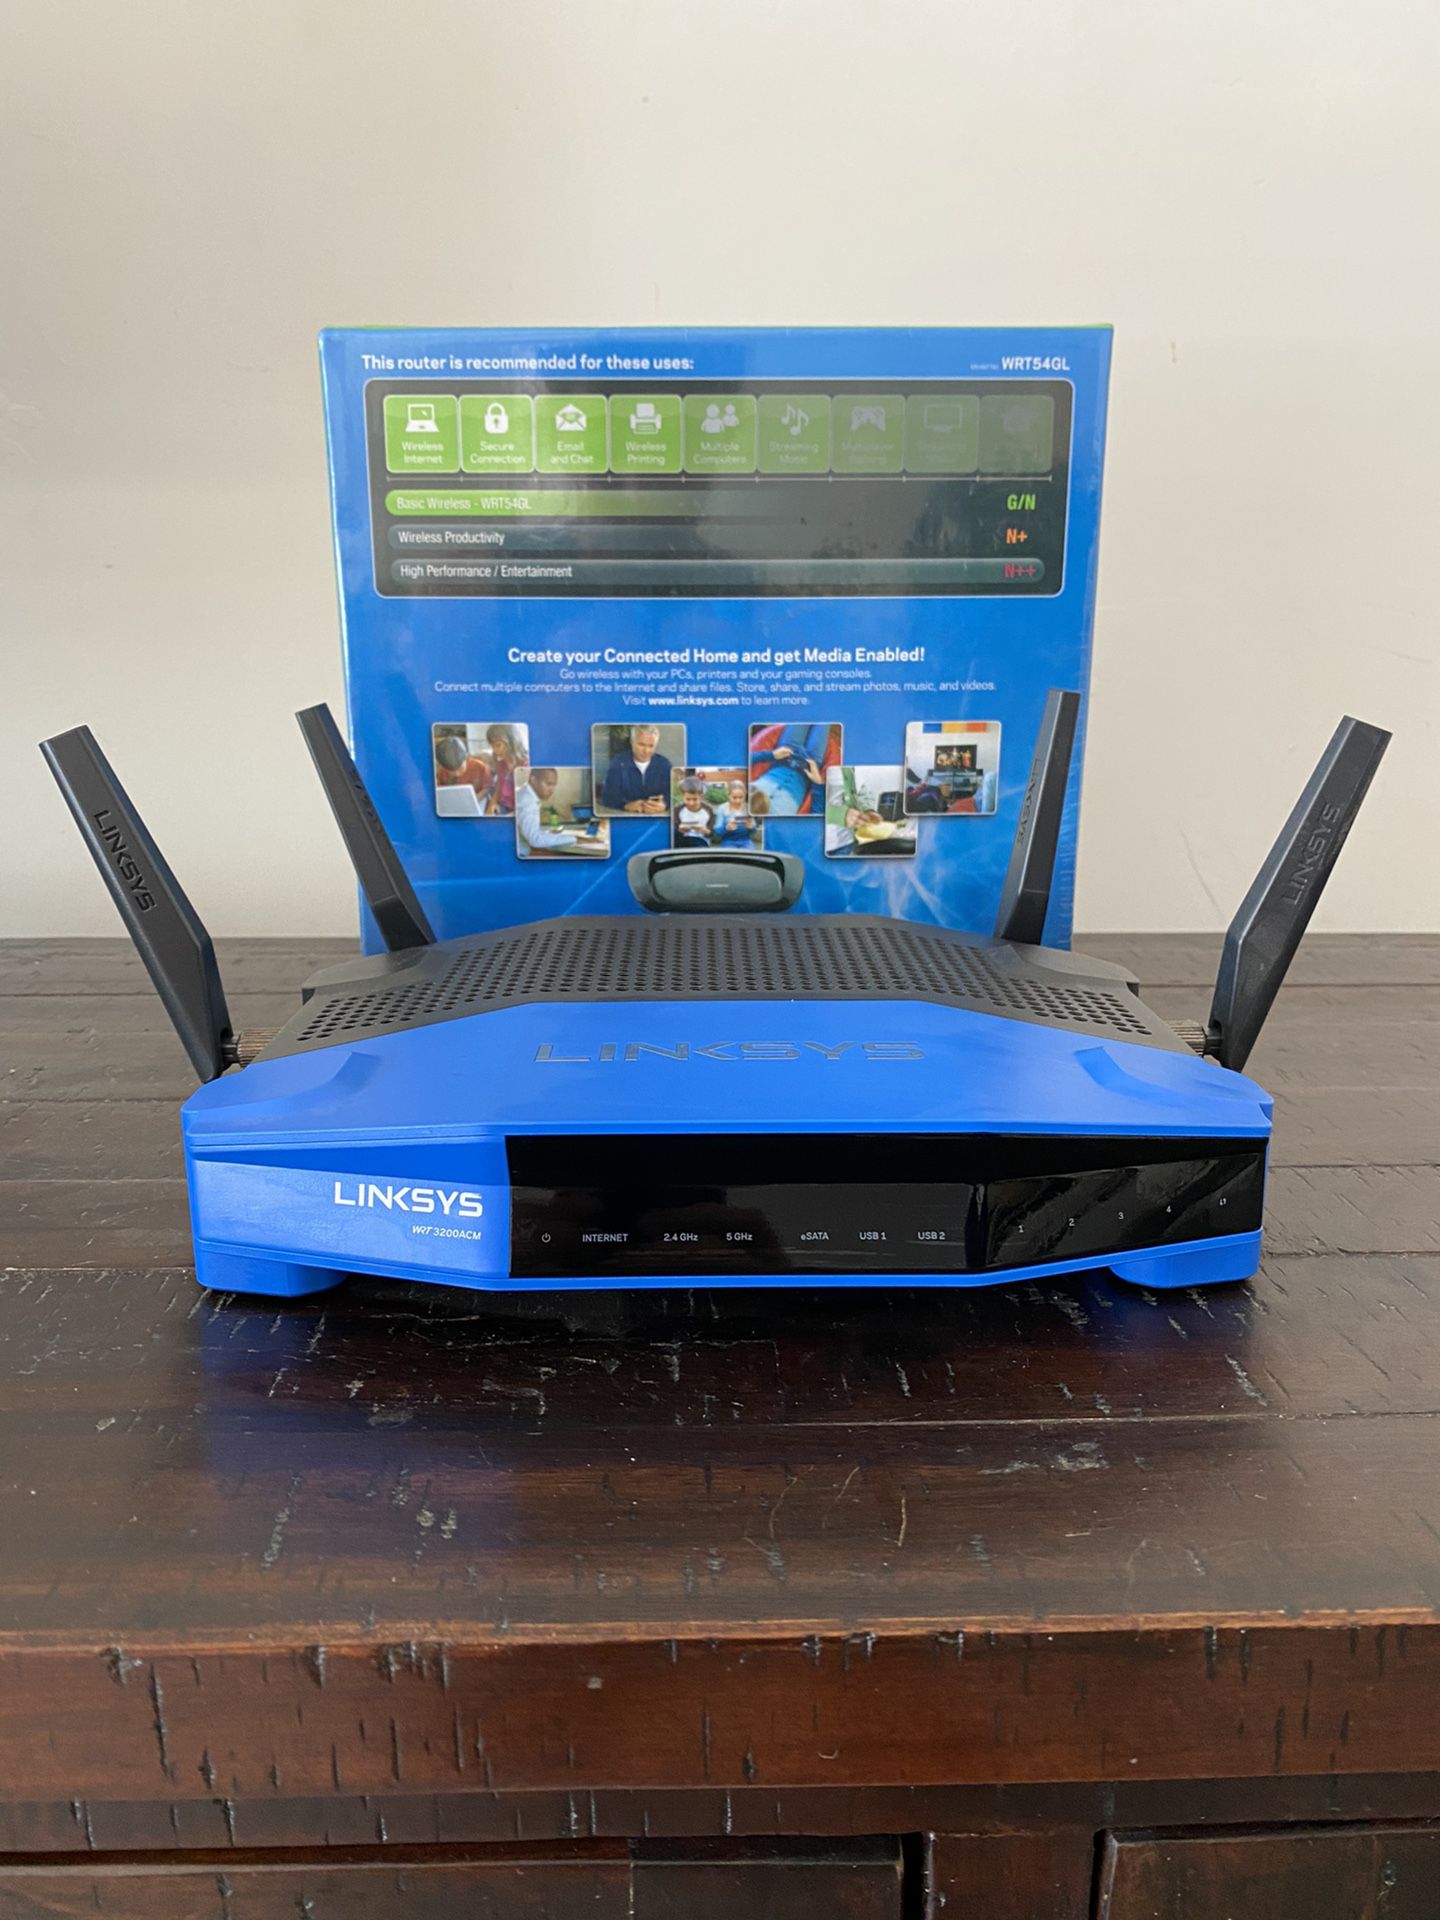 Linksys Wireless Router - WRT3200ACM